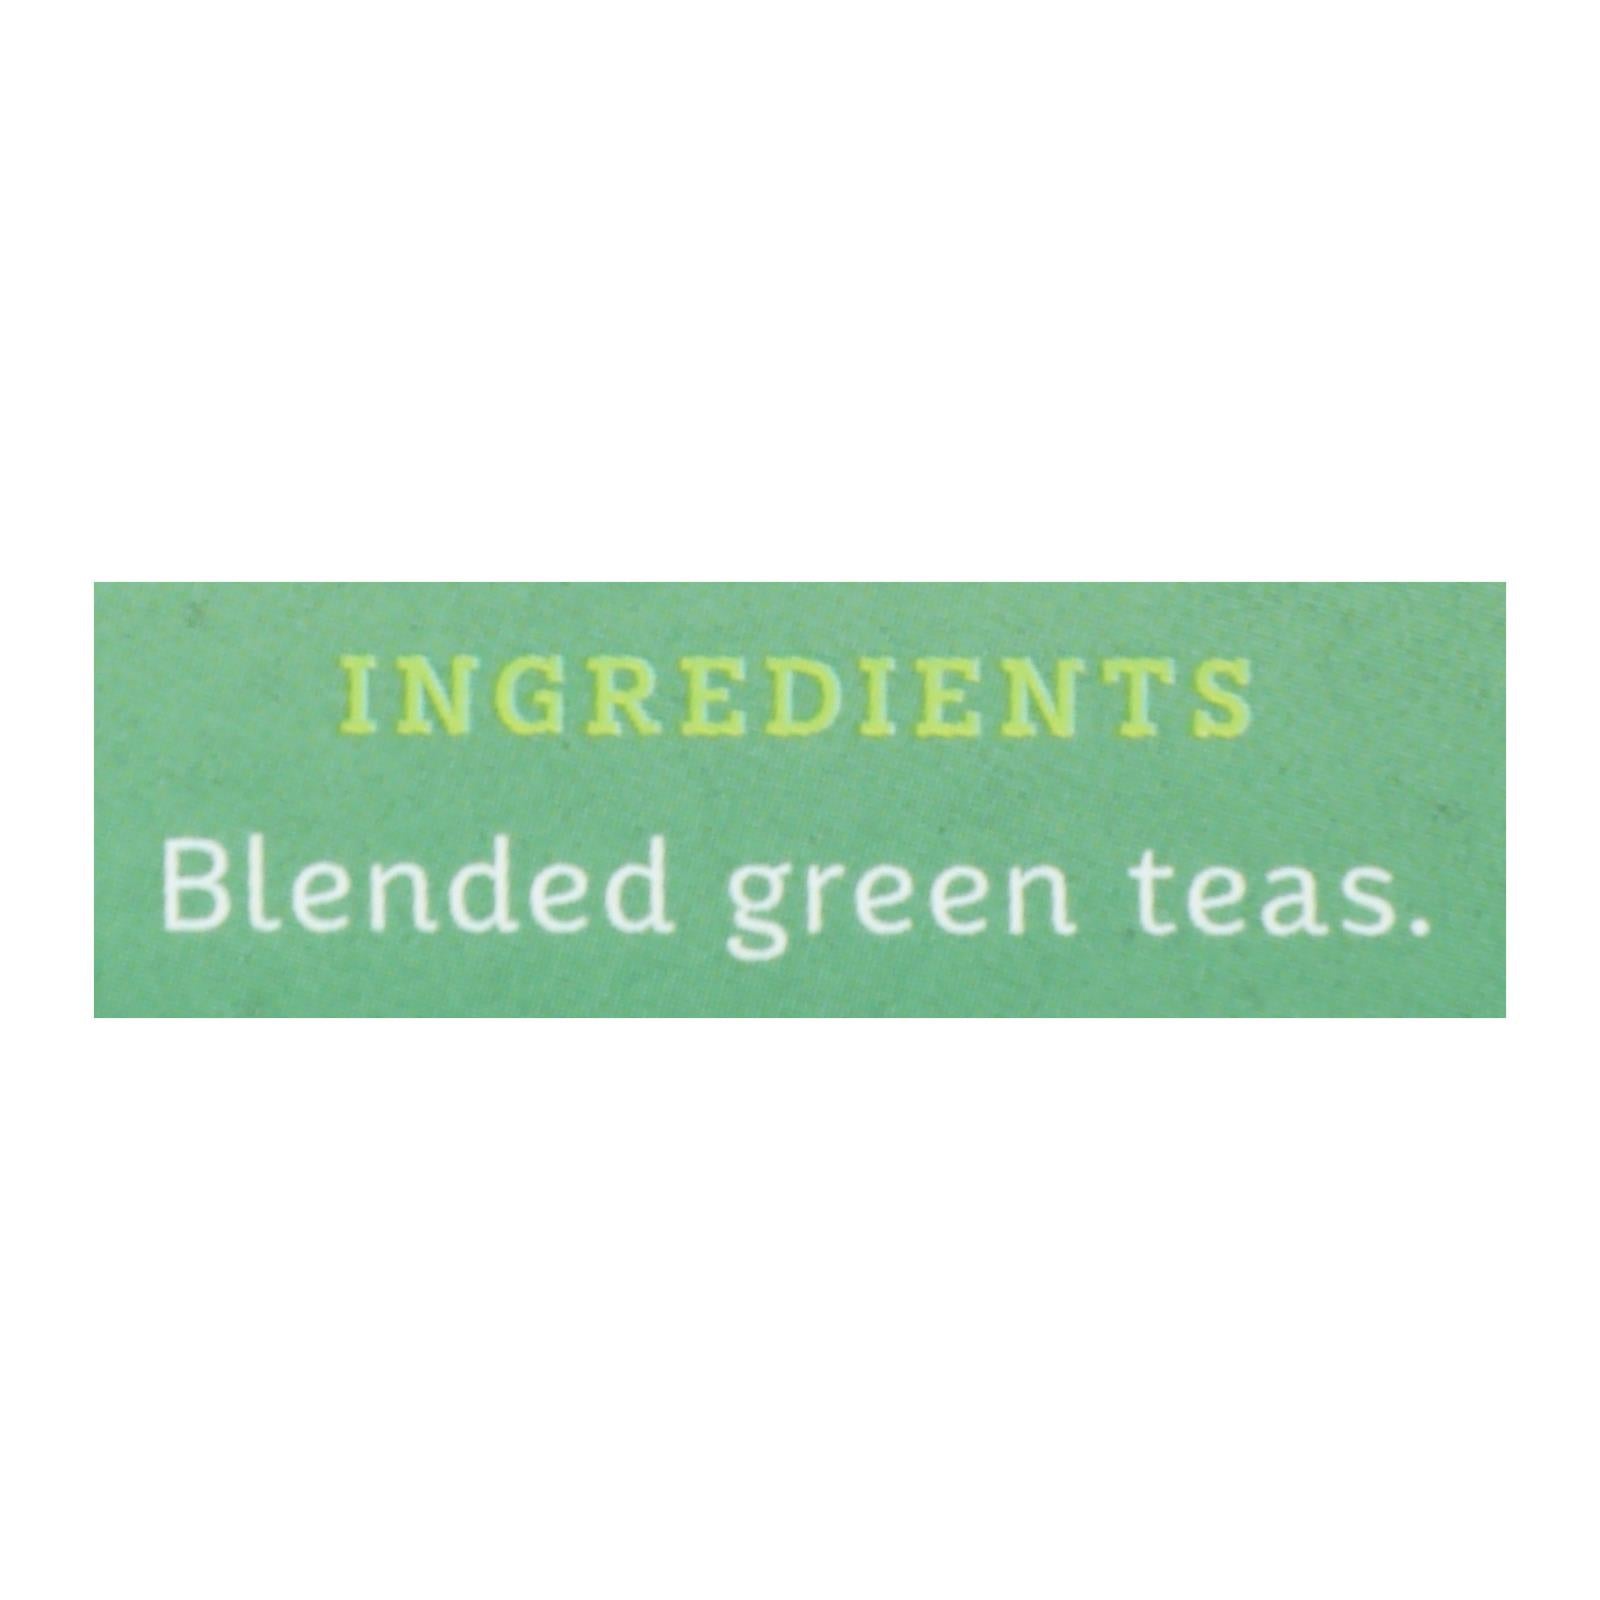 Stash Tea Organic Green Tea - Premium - Case Of 6 - 20 Bags